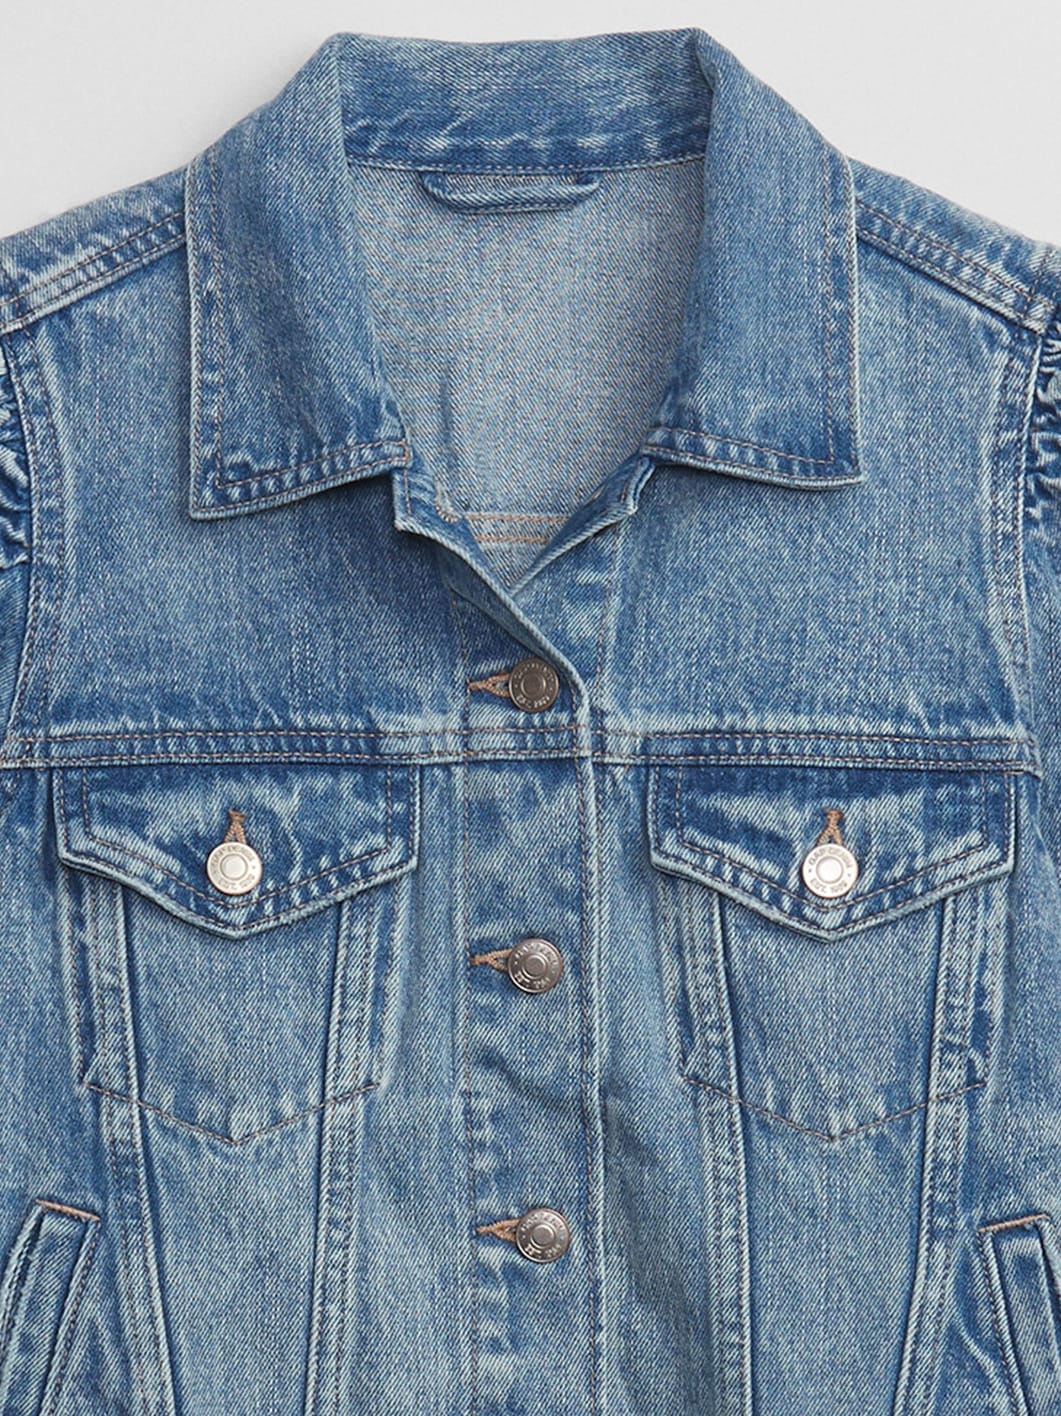 Puff Sleeve Icon Denim Jacket | Gap Factory